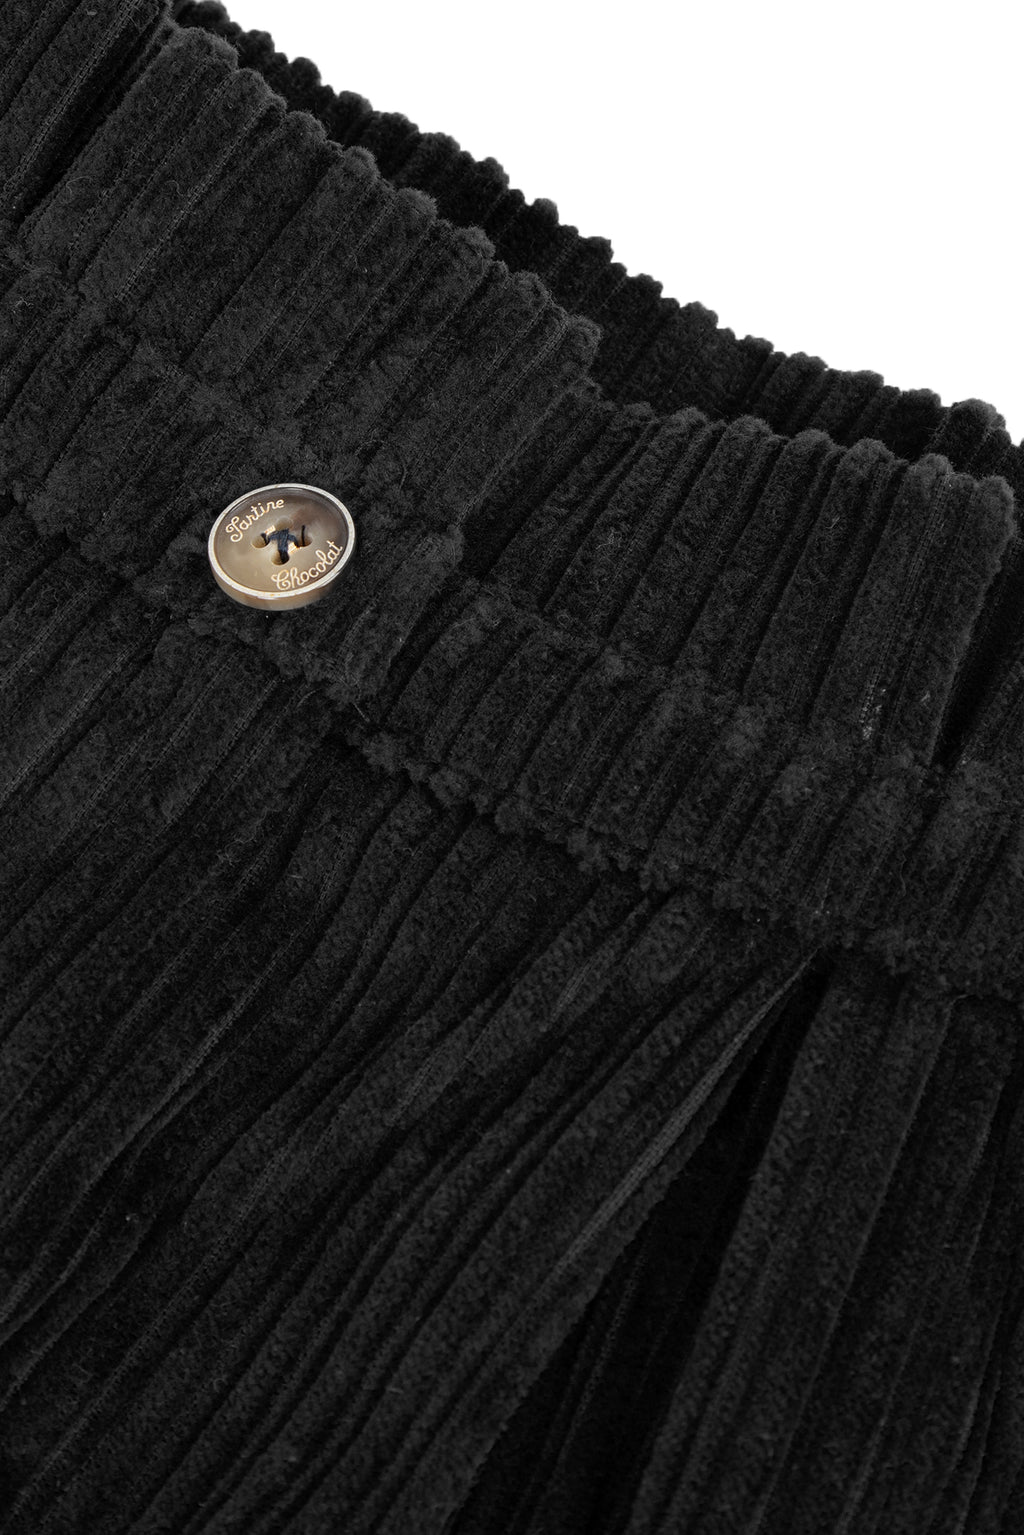 Trousers - Black flared Corduroy